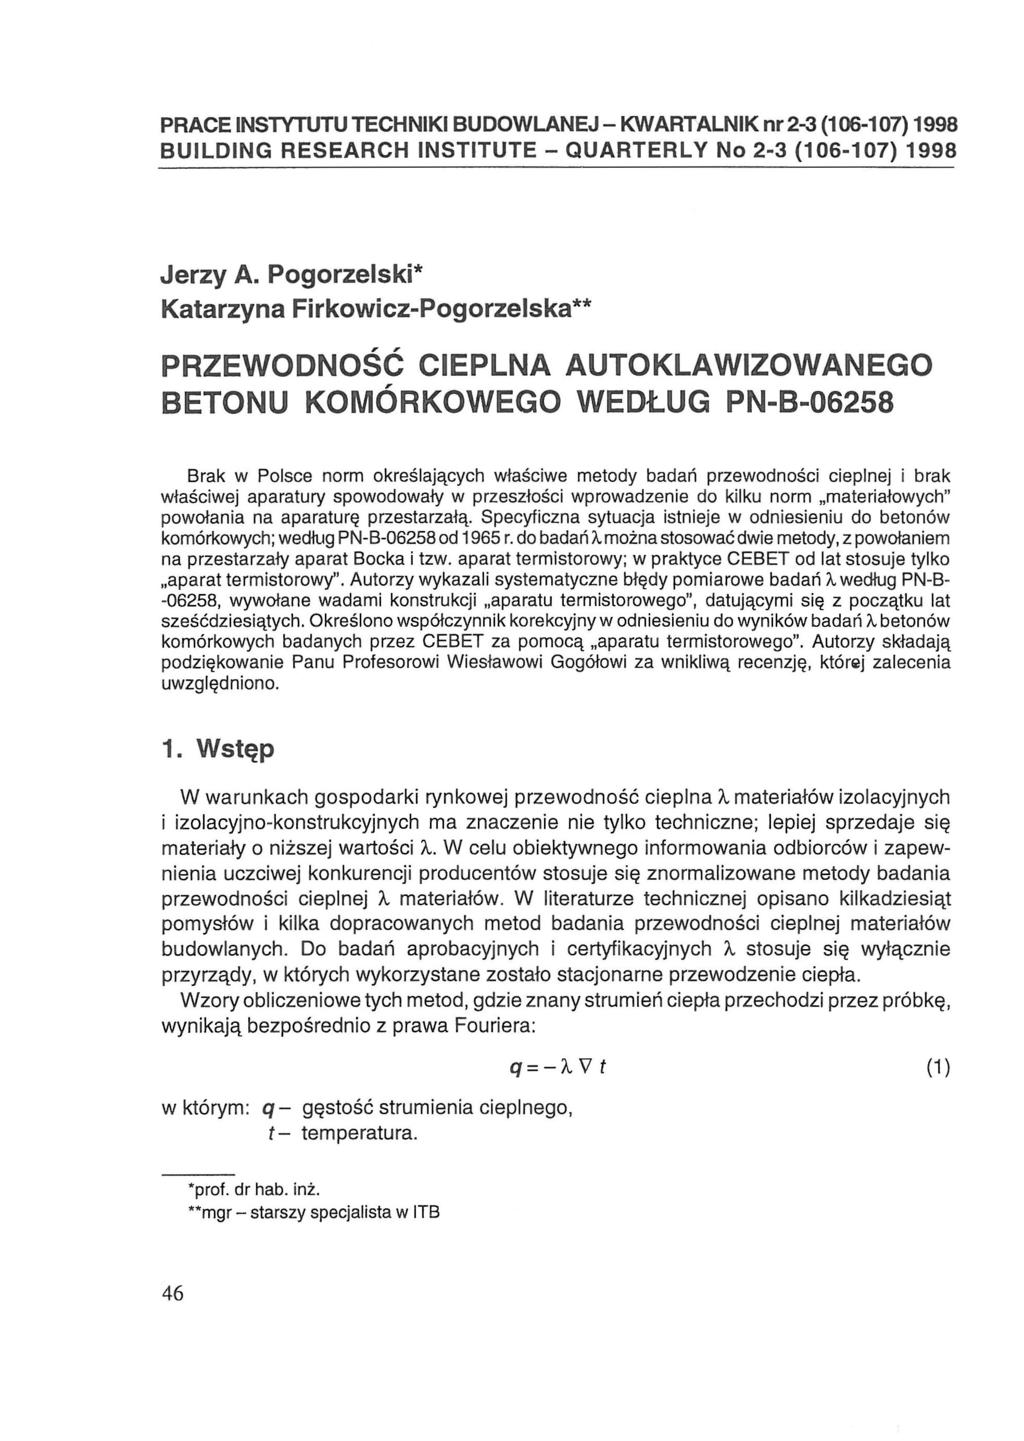 PRACE INSTYTUTU TECHNIKI BUDOWLANEJ - KWARTALNIK nr 2-3 (106-107) 1998 BUILDING RESEARCH INSTITUTE - QUARTERLY No 2-3 (106-107) 1998 Jerzy A.